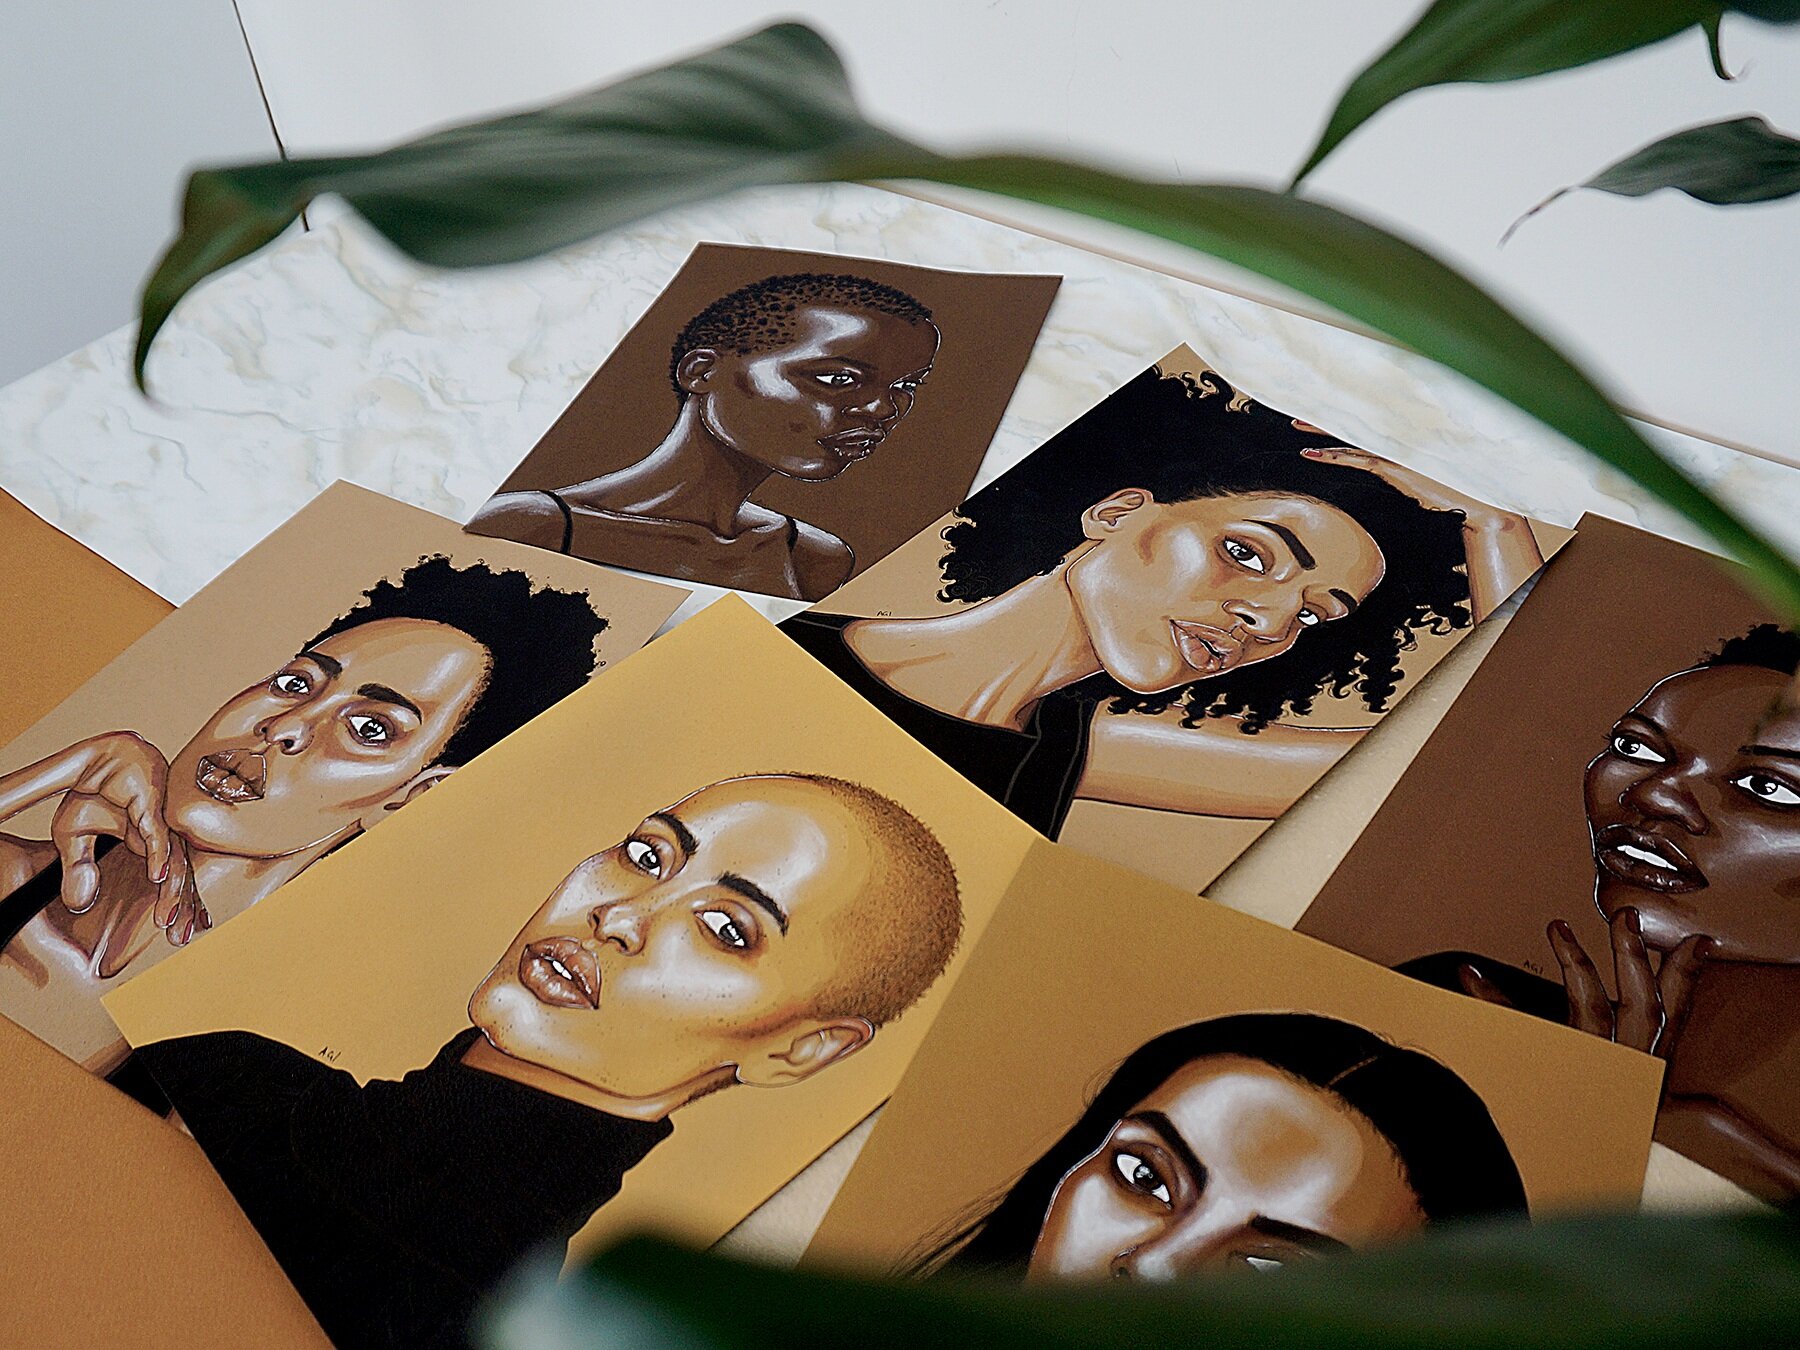  South Sudan, Ethiopia, Tanzania, Nigeria, Ghana and Eritrea represented in this new set of portraits 